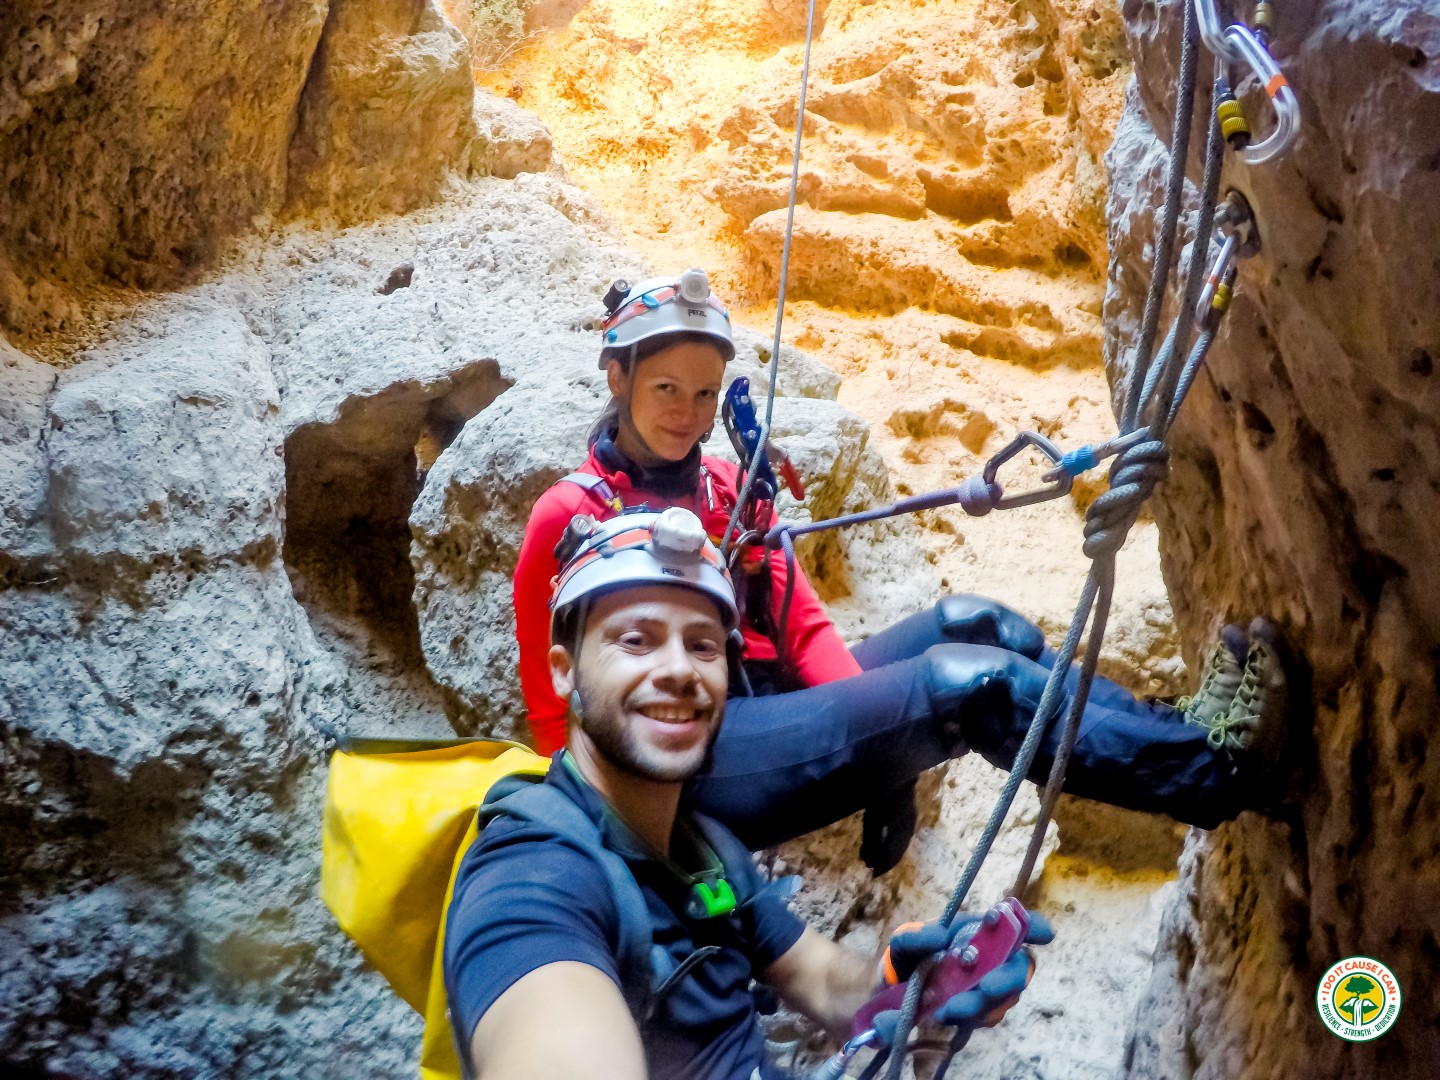 Toufic Abou Nader & Joanna Slomiak Arch Cave Oman